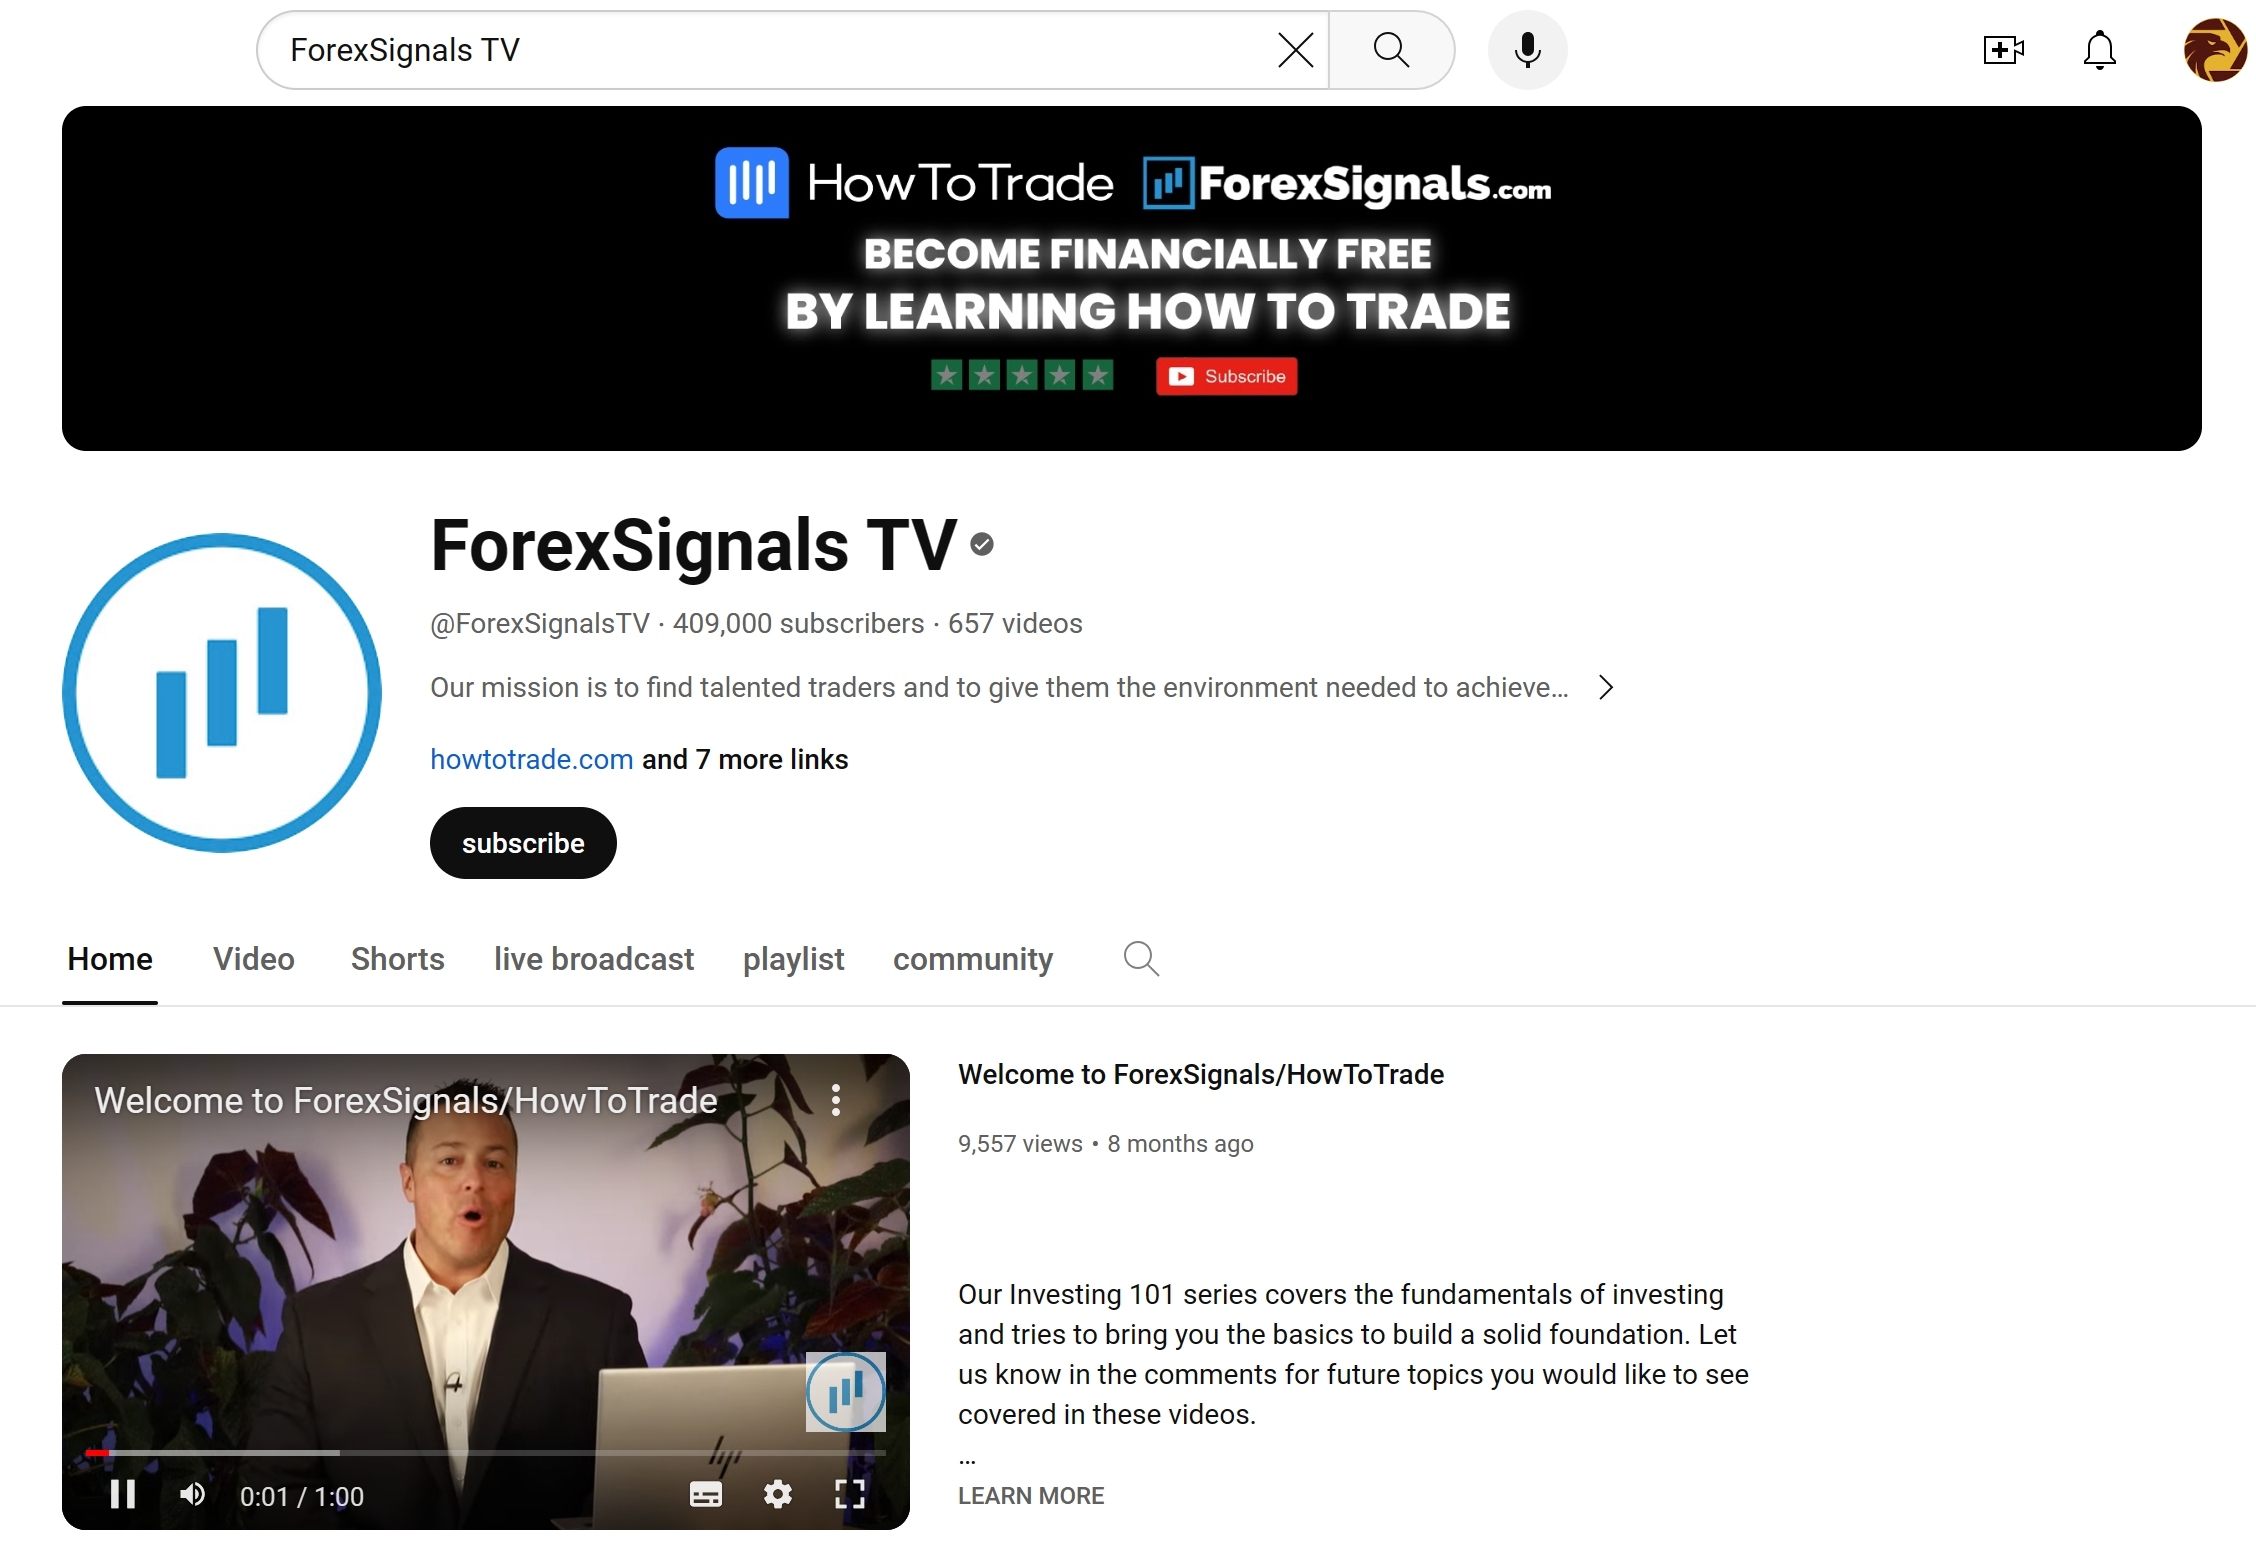 ForexSignals TV YouTube homepage